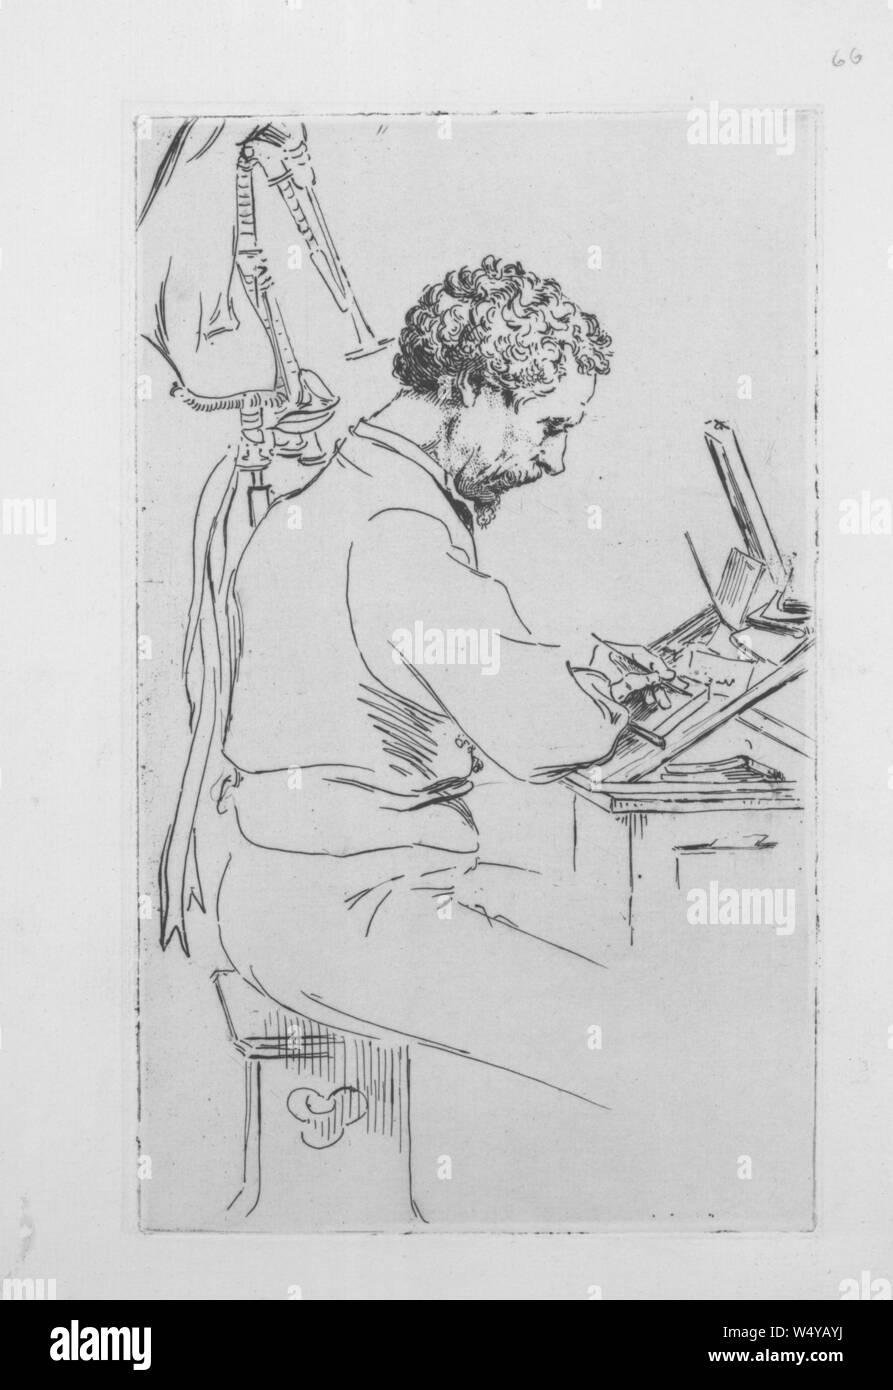 Engraved portrait of Charles Samuel Keene, an English artist, and illustrator, illustrated by Felix Henri Bracquemond, 1871. () Stock Photo